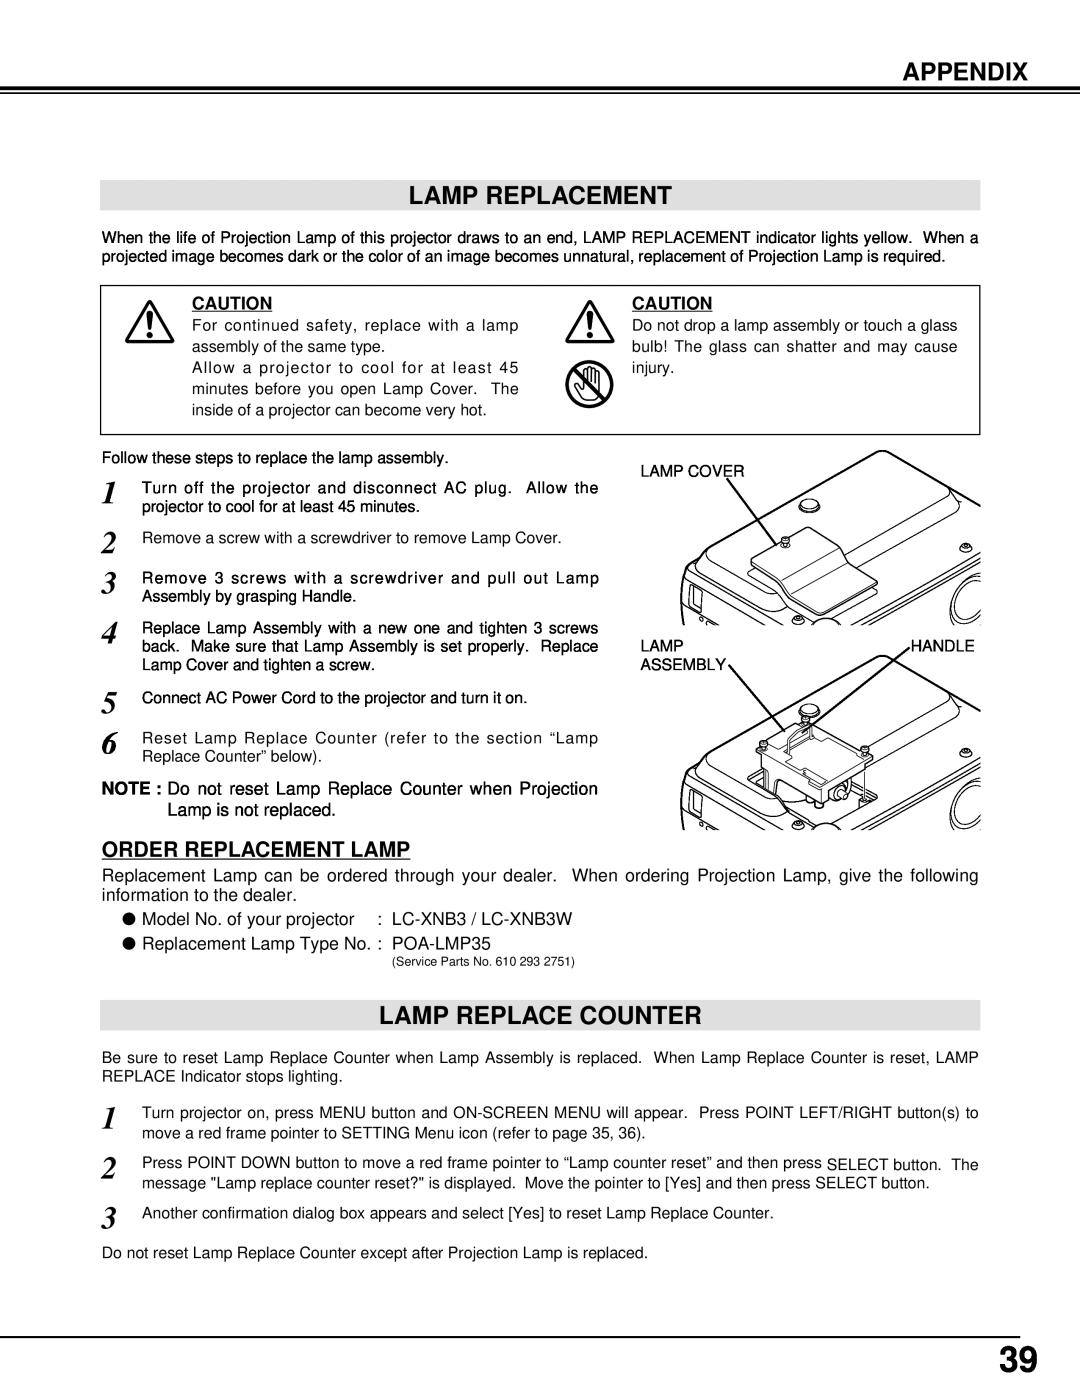 Eiki LC-XNB3W owner manual Appendix Lamp Replacement, Lamp Replace Counter, Order Replacement Lamp 